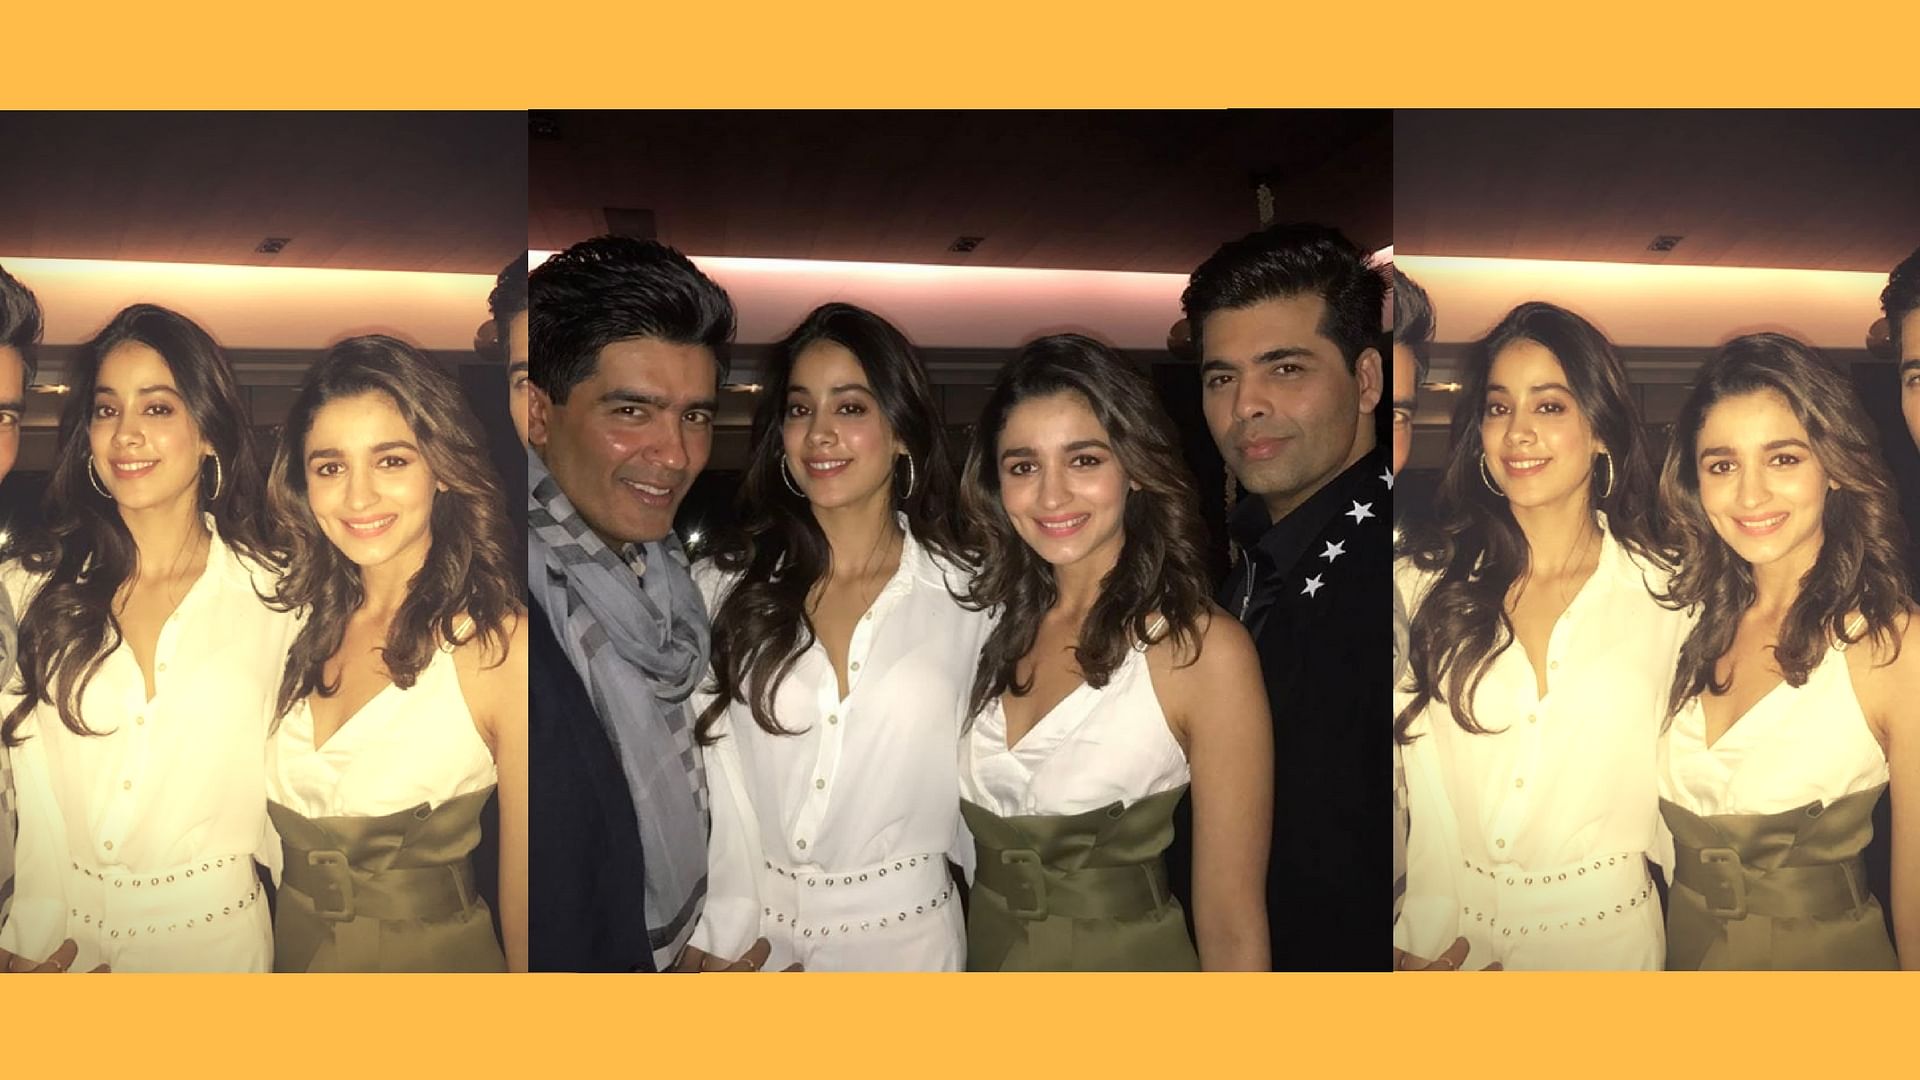 Manish Malhotra, Jhanvi Kapoor, Alia Bhatt and Karan Johar in one of their star-studded get-togethers. (Photo courtesy: Instagram)